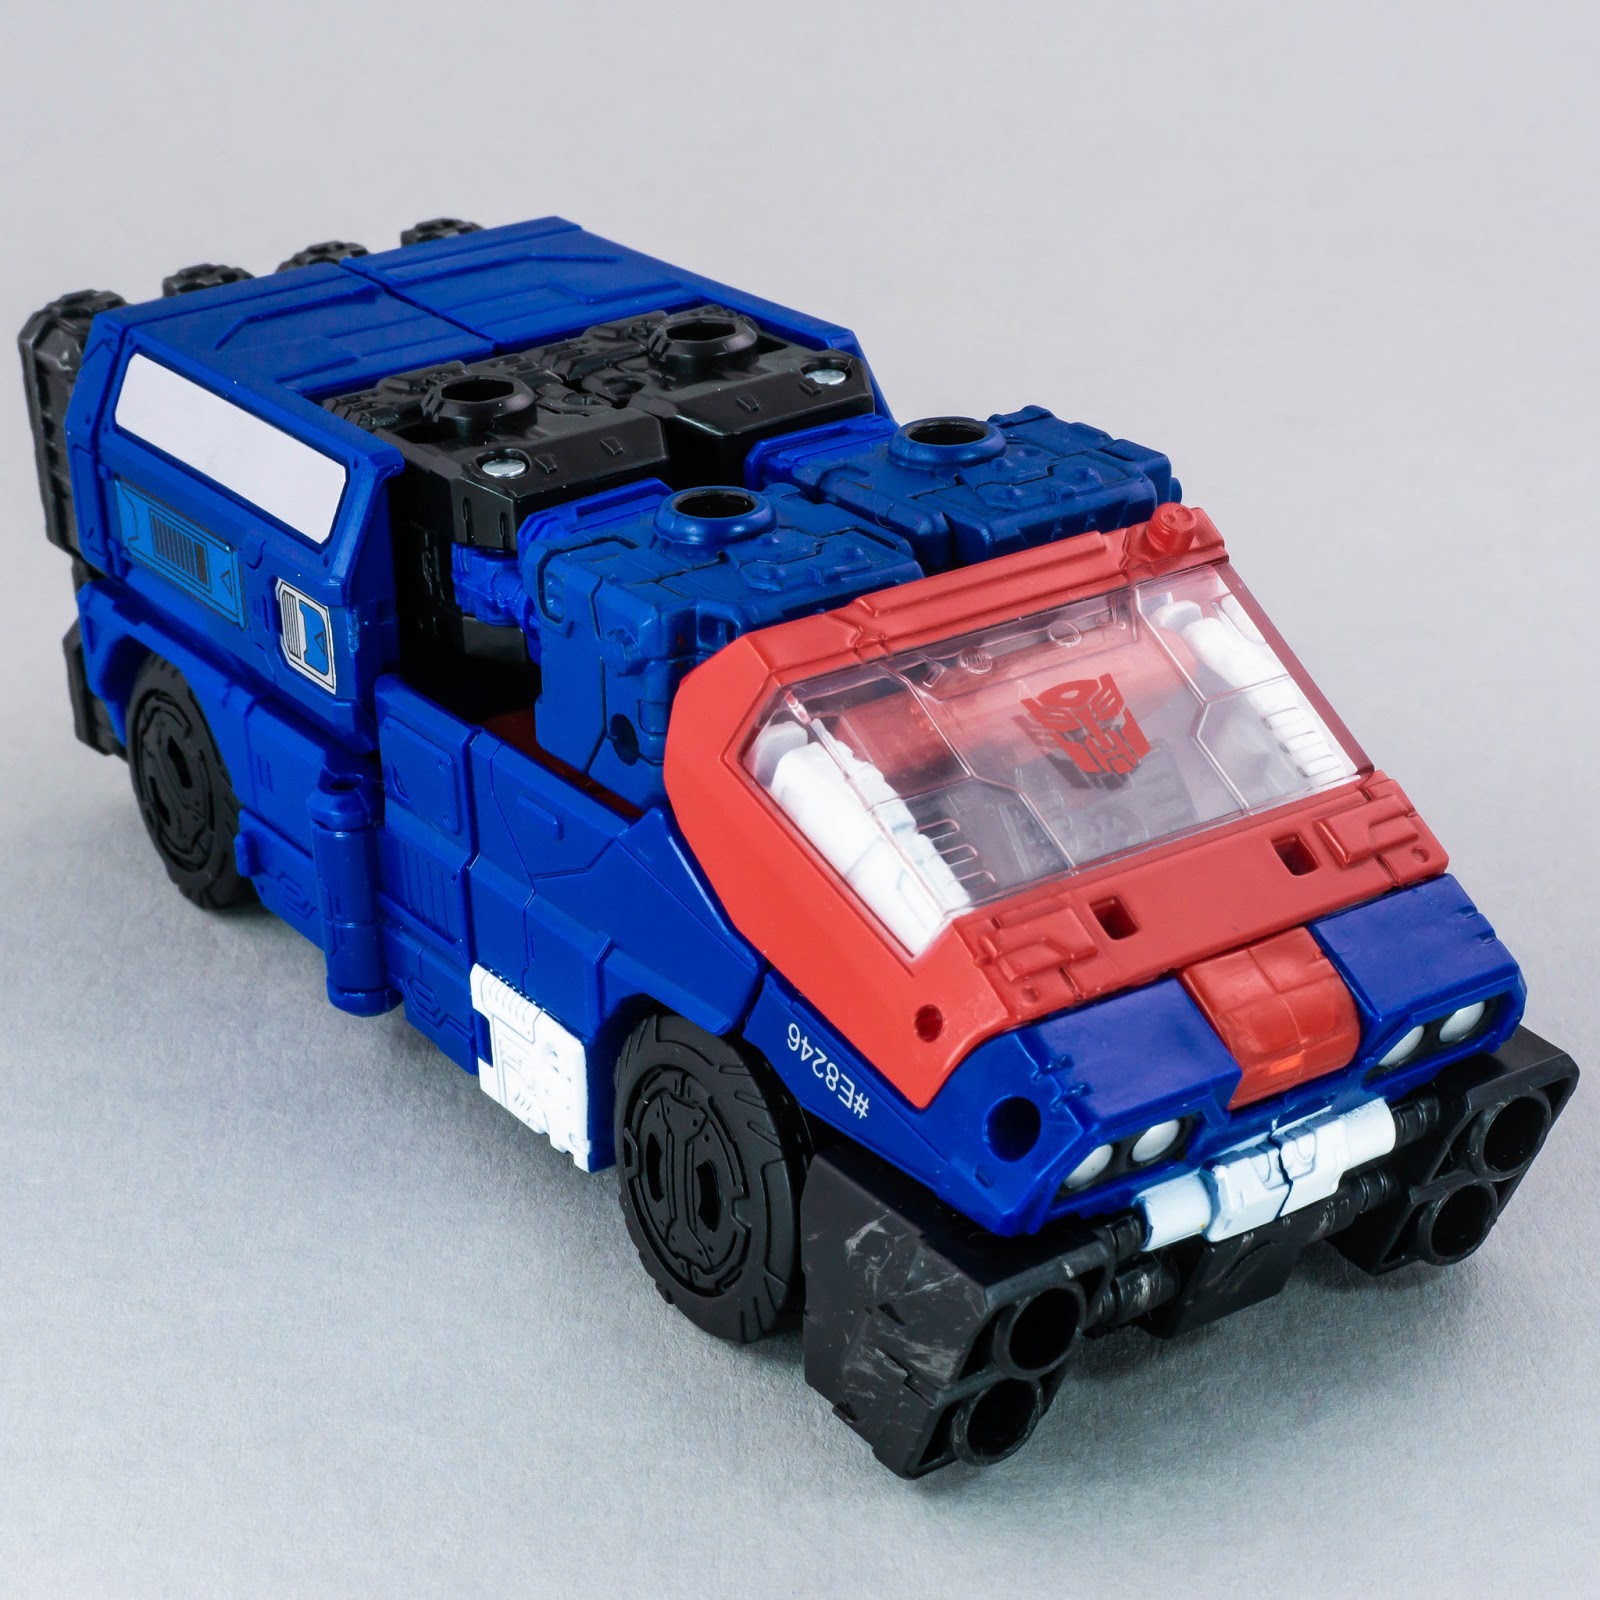 Transformers Siege Crosshairs vehicle mode